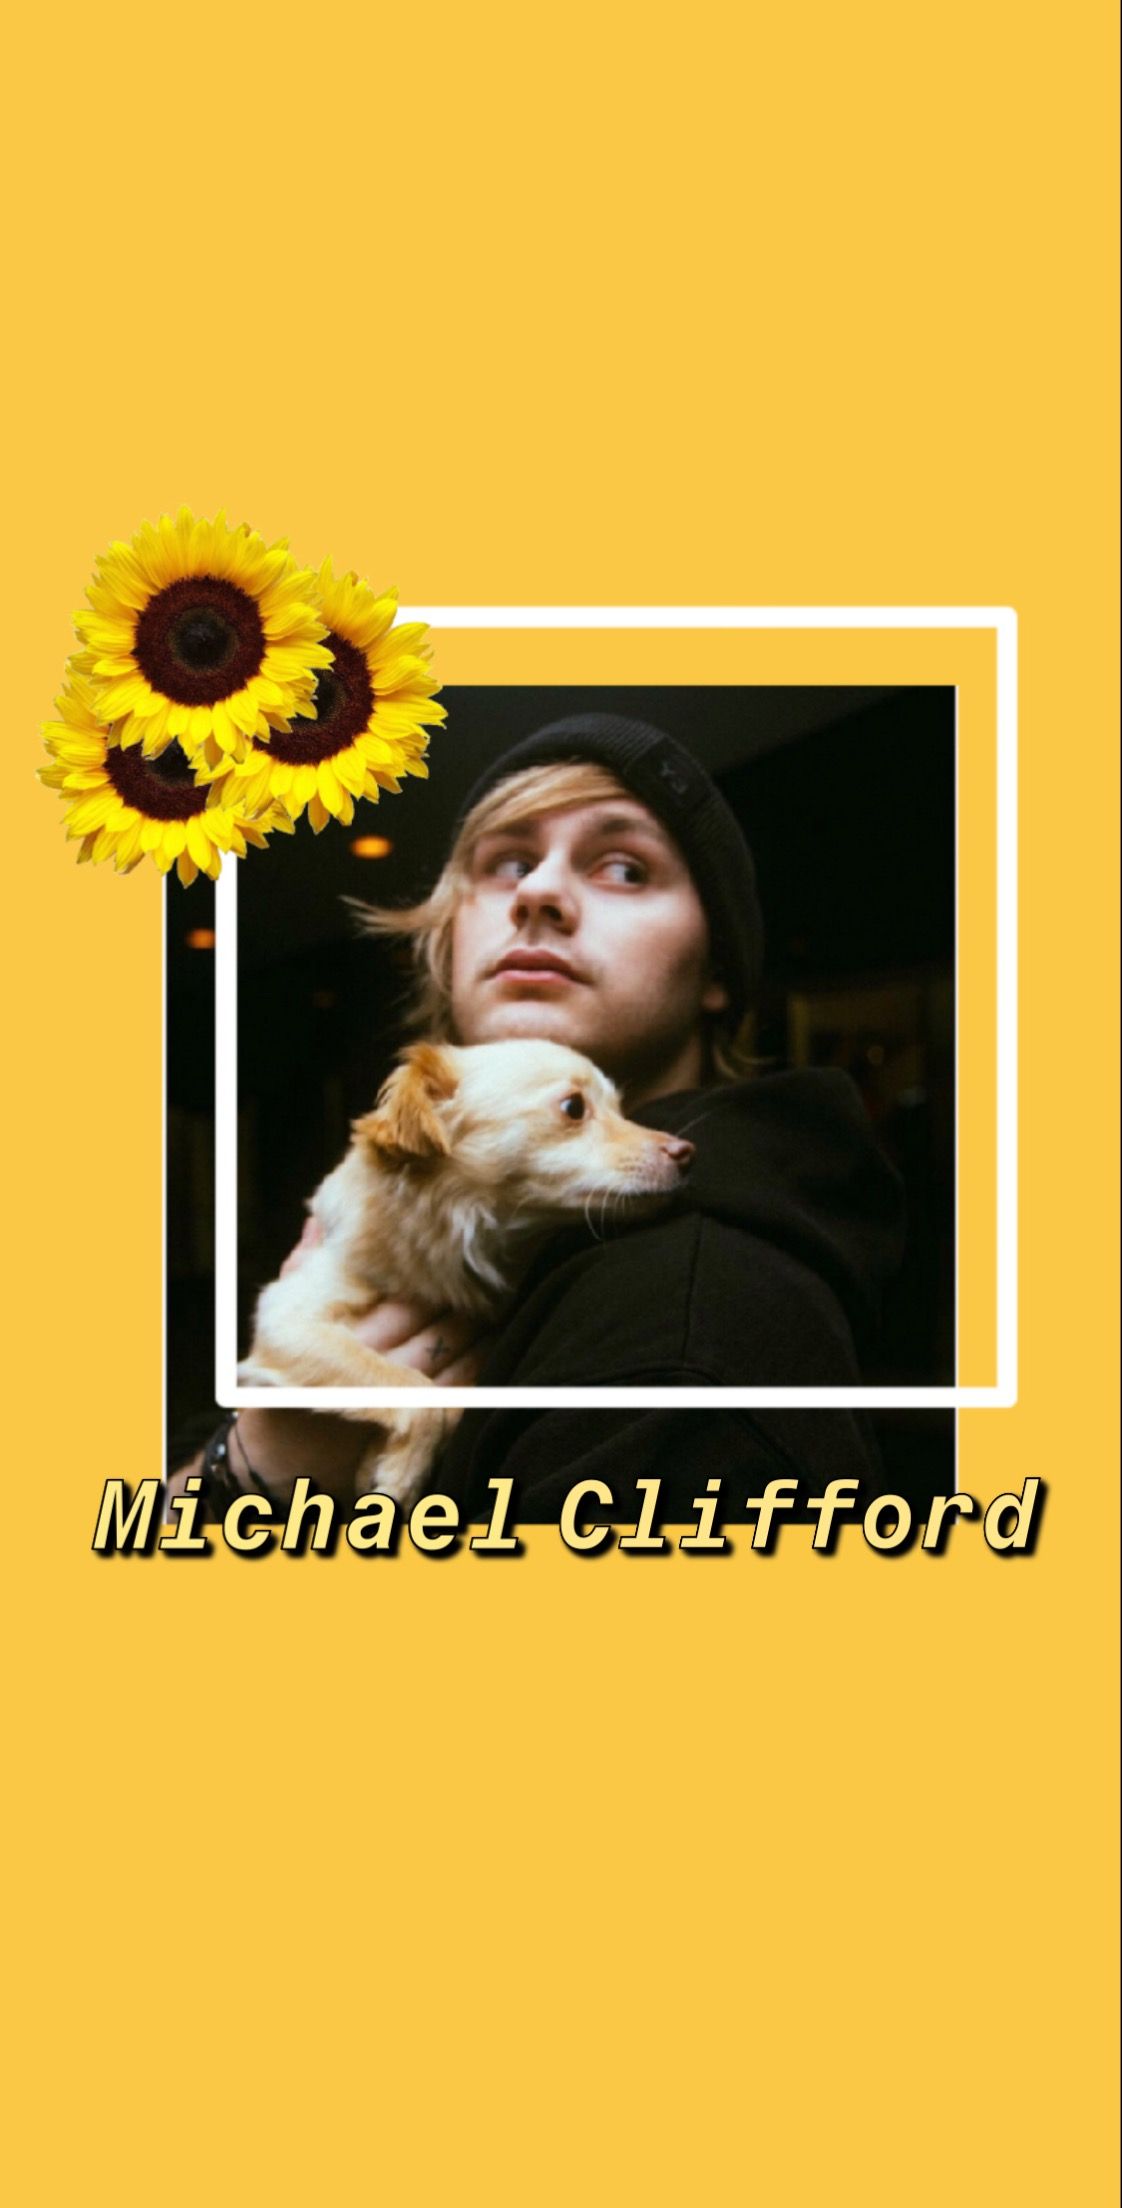 Michael Clifford - HD Wallpaper 